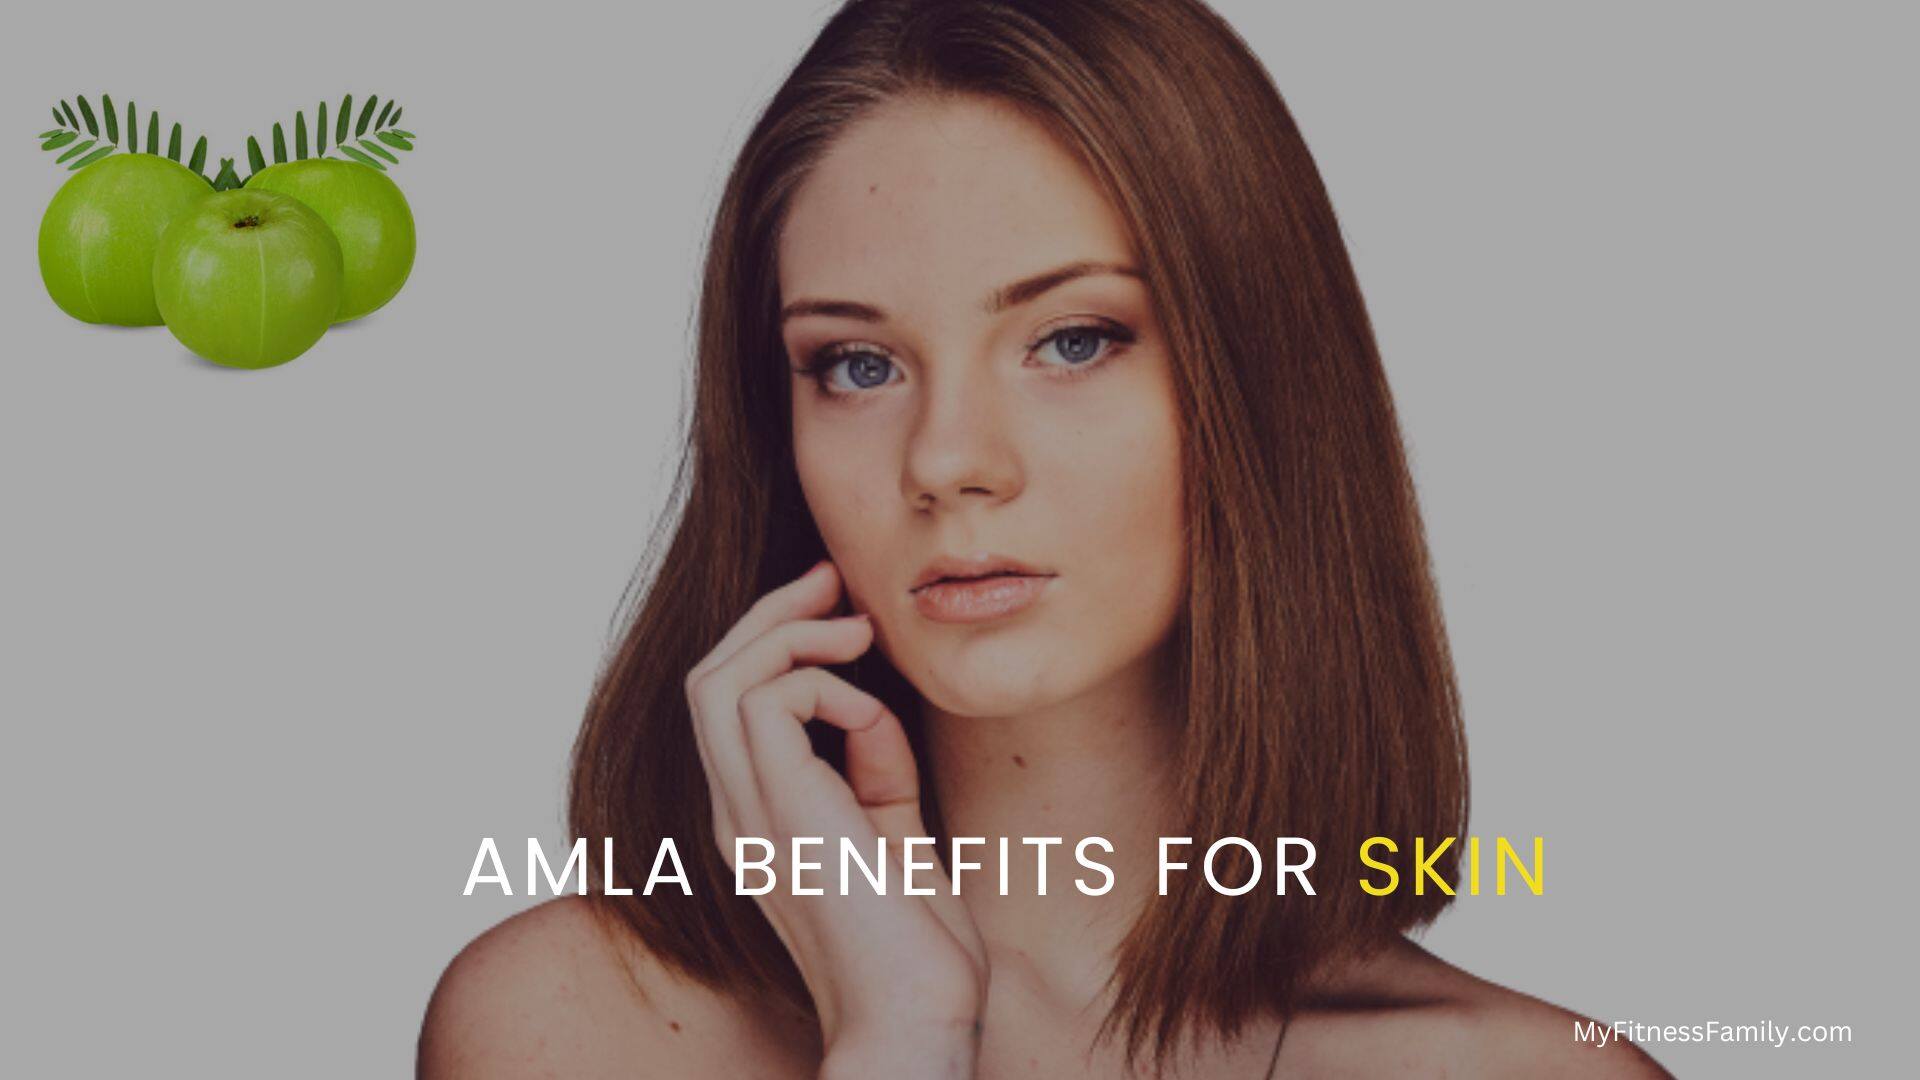 Amla benefits for the skin